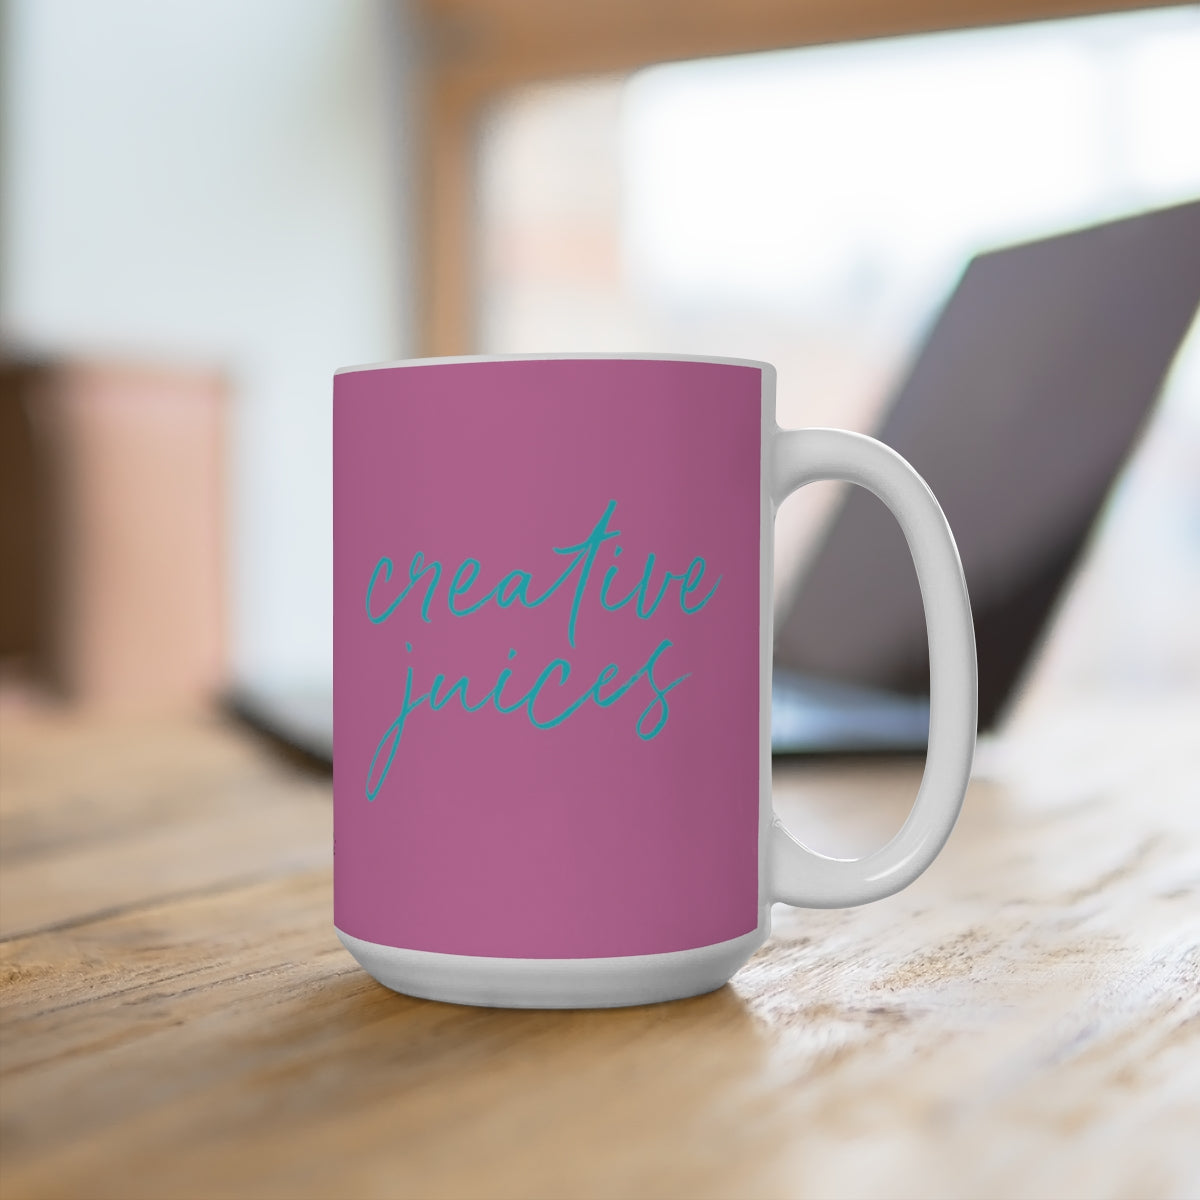 Pink and Blue Creative Juices Mug